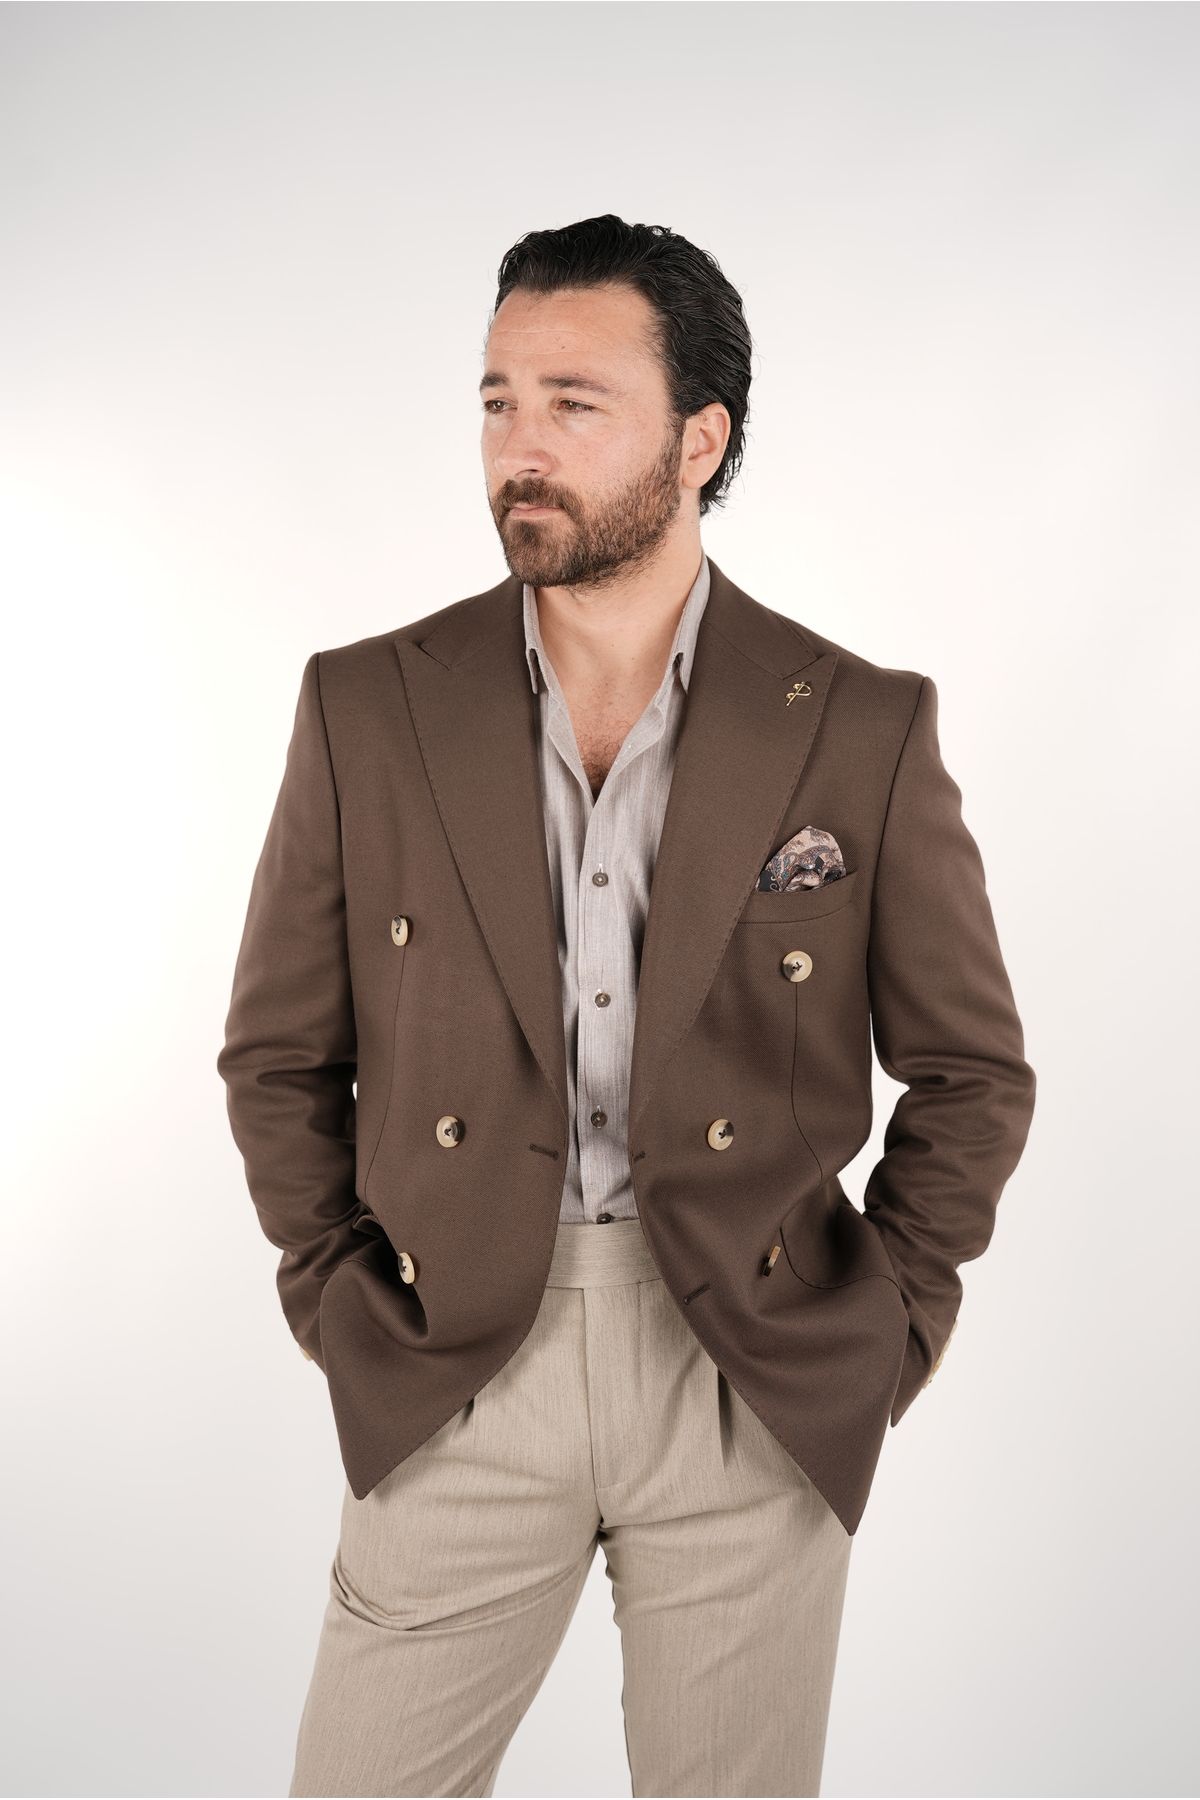 PAREZ Premium İtalyan Stil Slim Fit Erkek Punto Dikişli Torba Cepli Yarım Astarlı Kruvaze Ceket